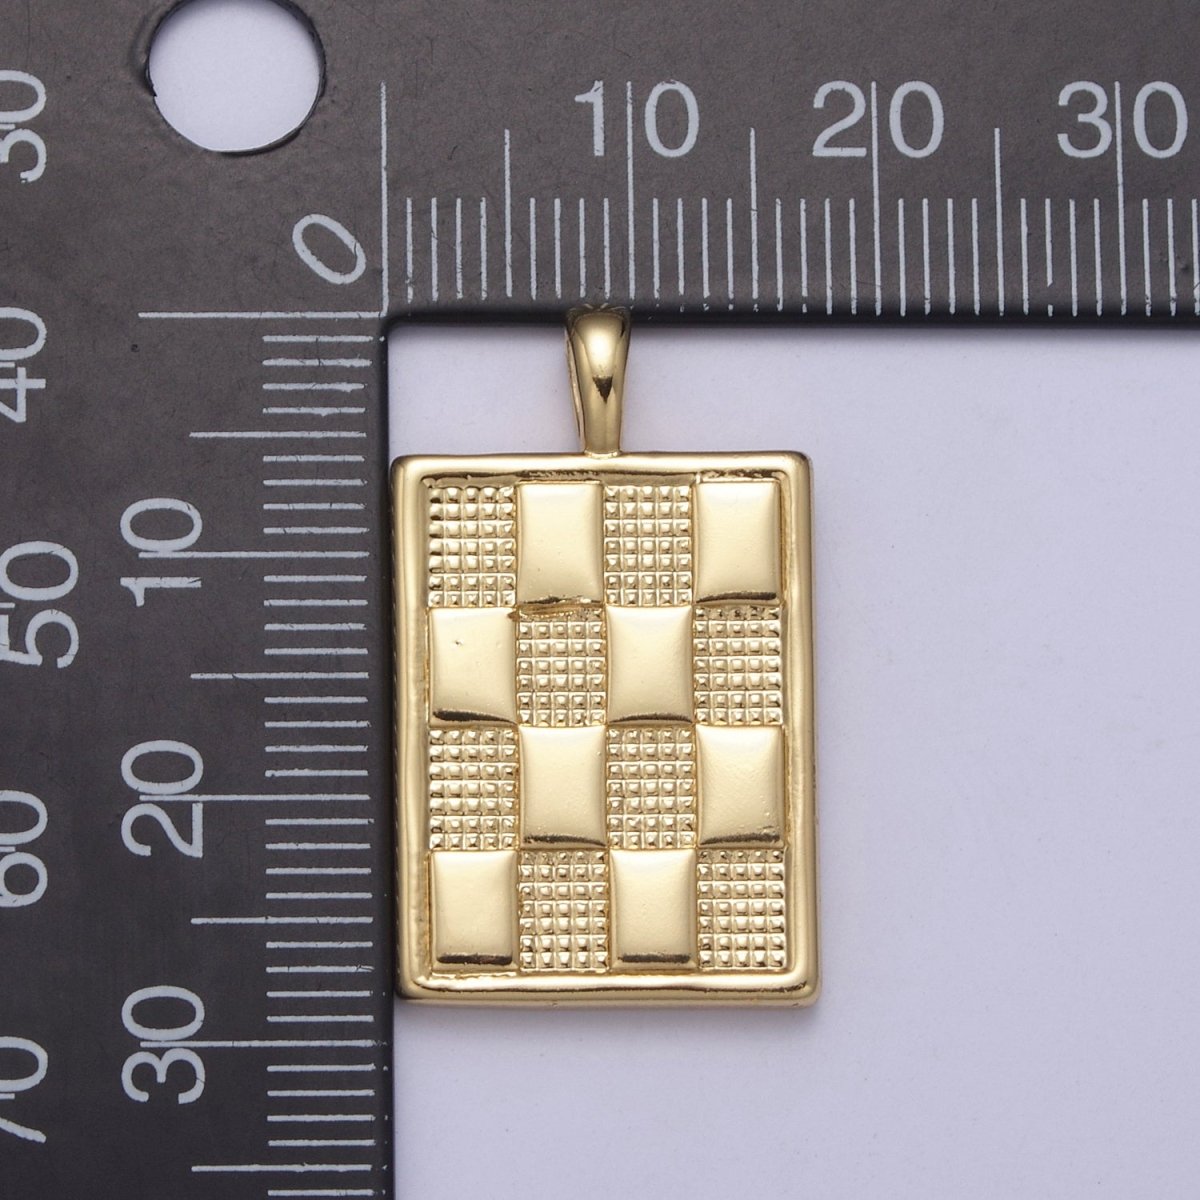 Dainty Gold Square Medallion Charm Checker Board Pendant for Men Women Unisex Jewelry Making H-434 - DLUXCA